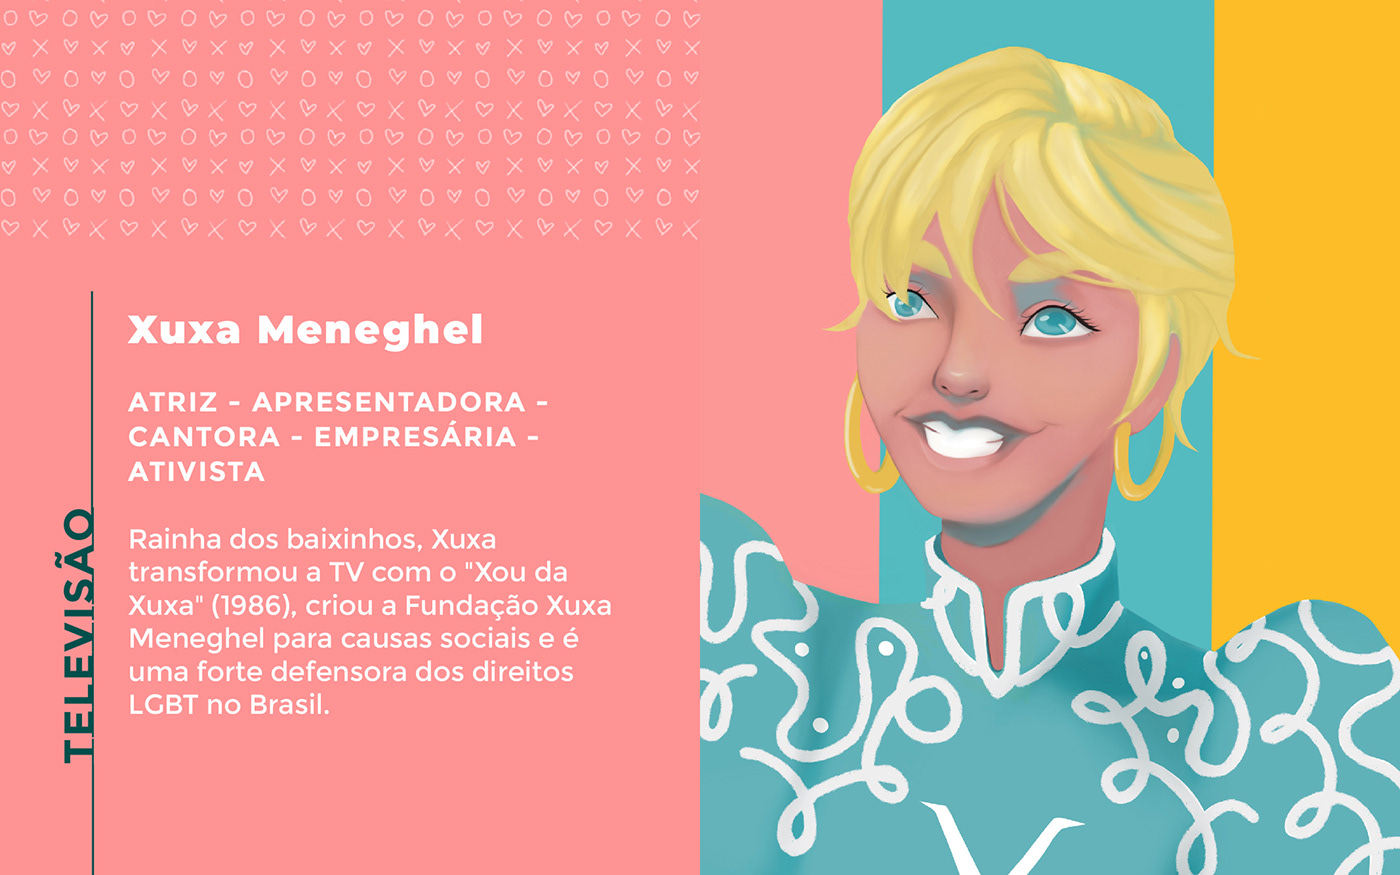 An illustrated portrait of  Xuxa Meneghel, a famous brazilian television presenter